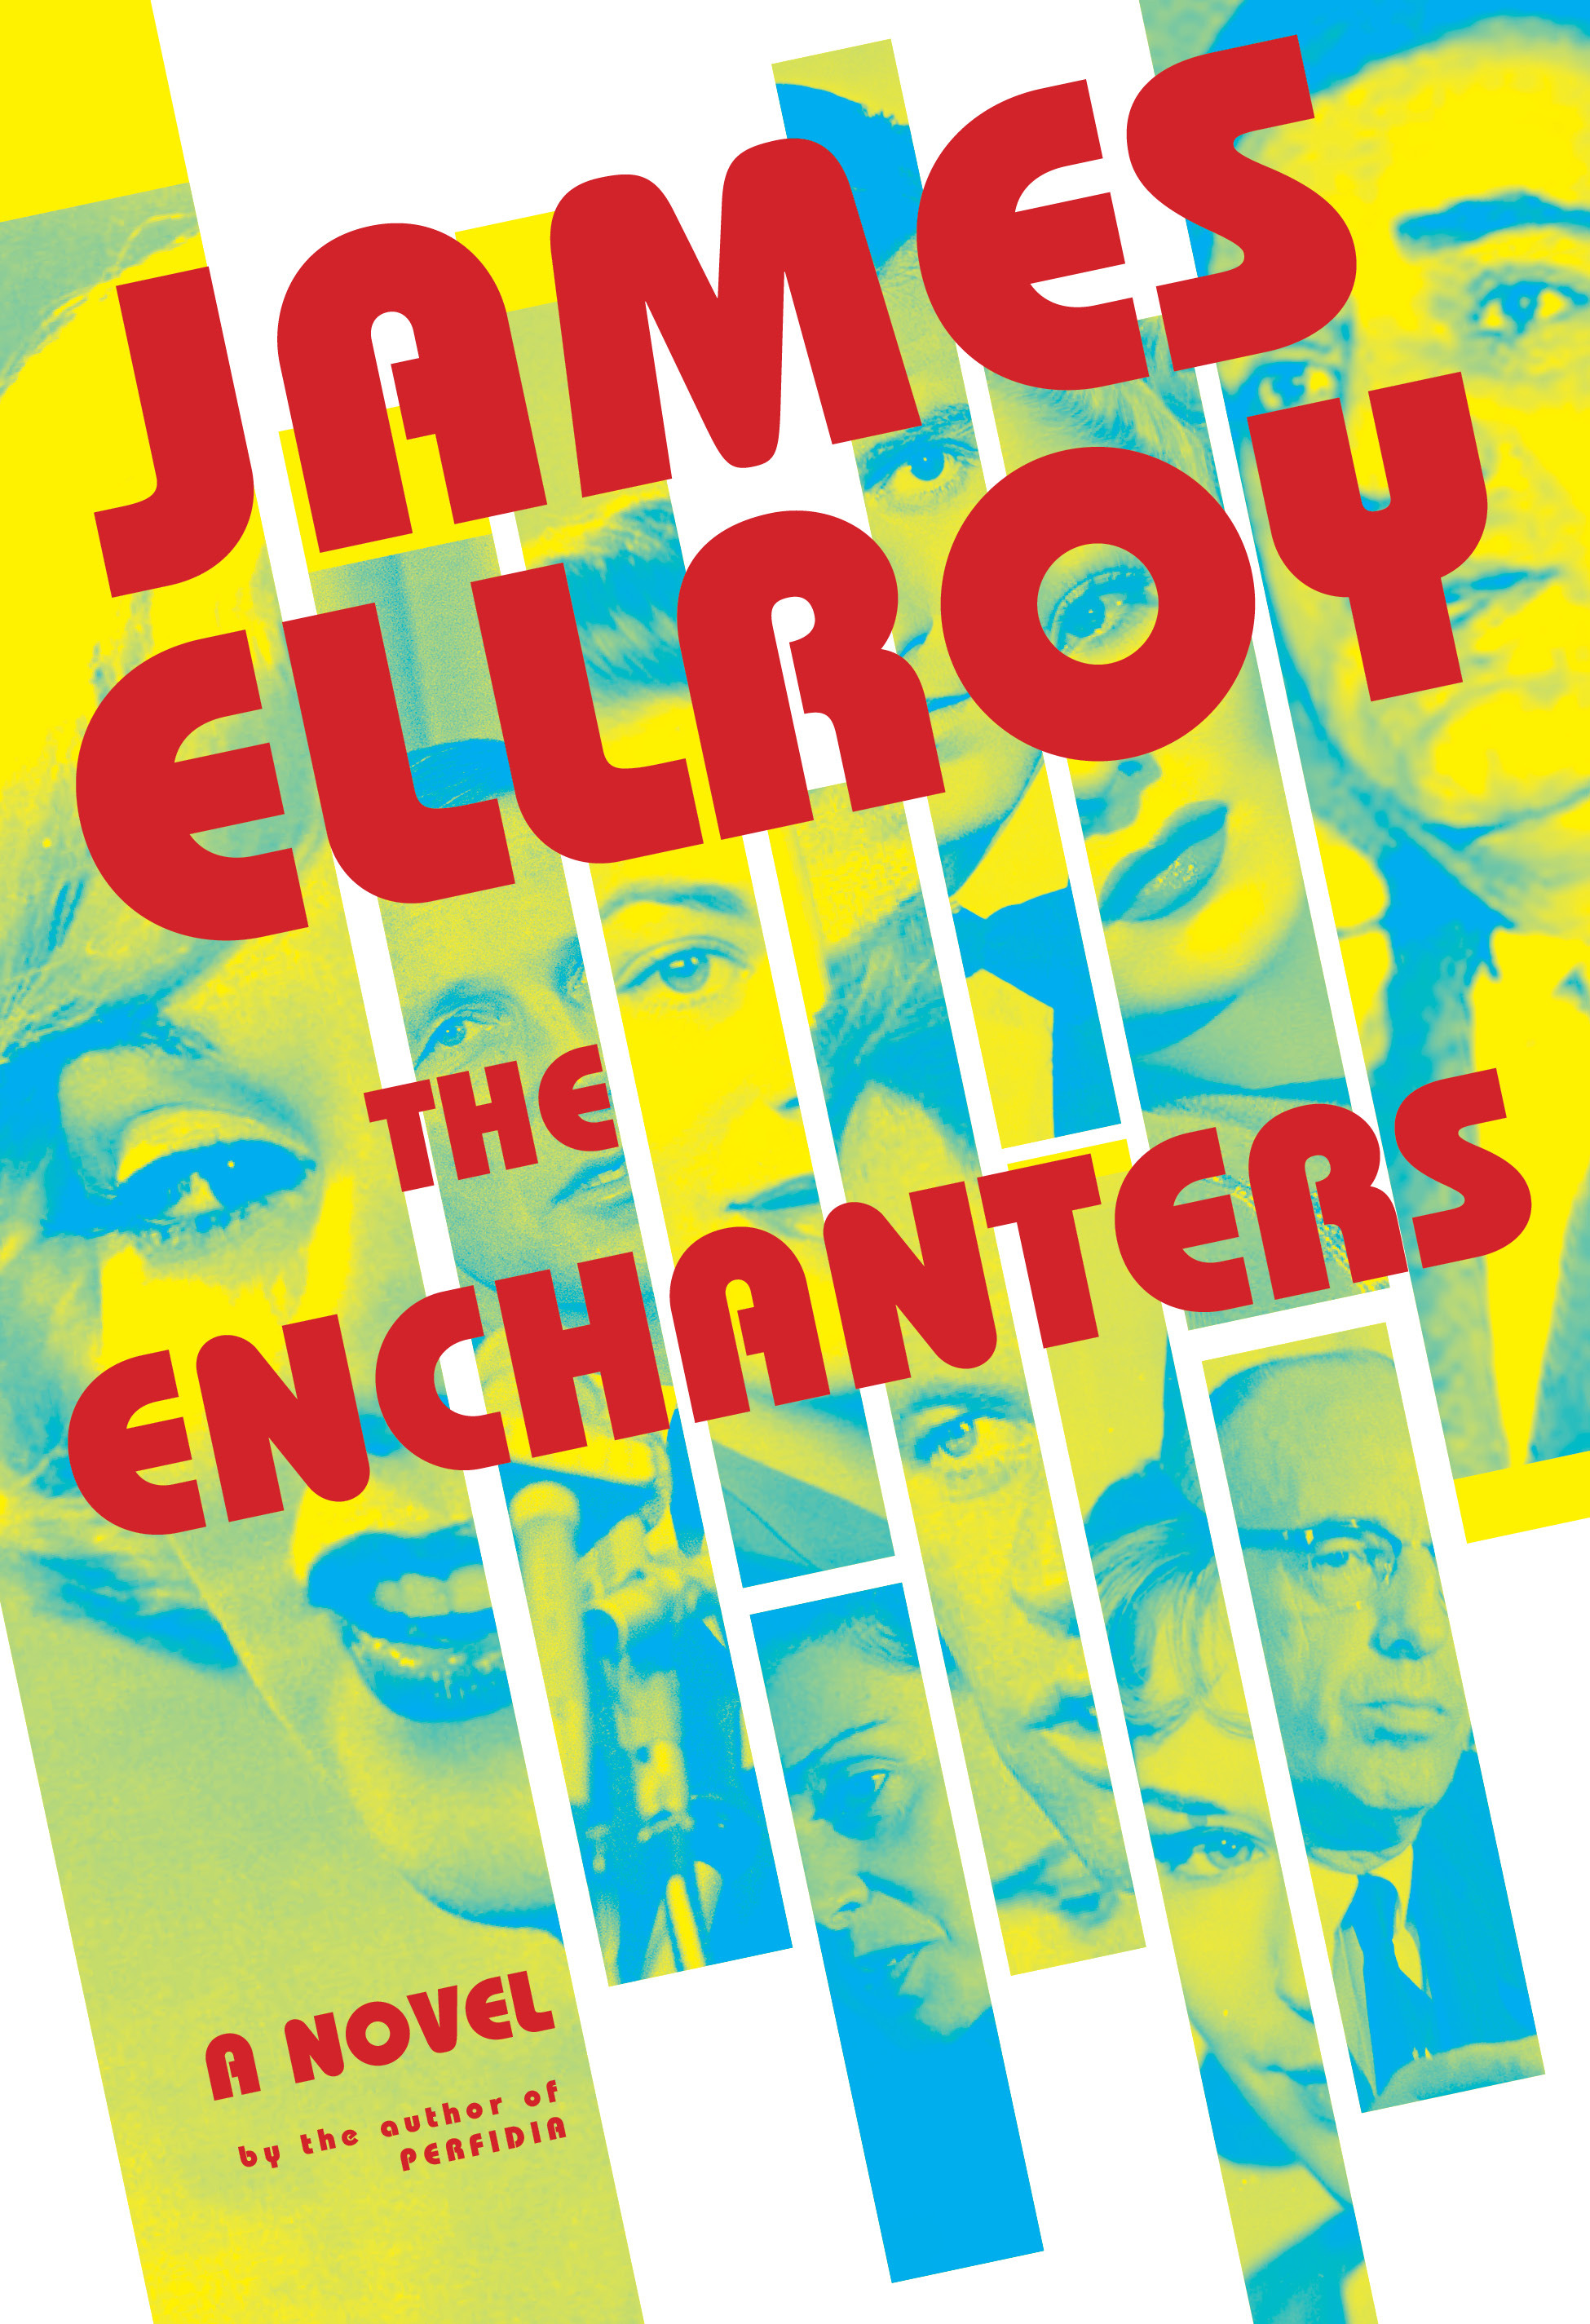 The Enchanters : A novel | Ellroy, James (Auteur)